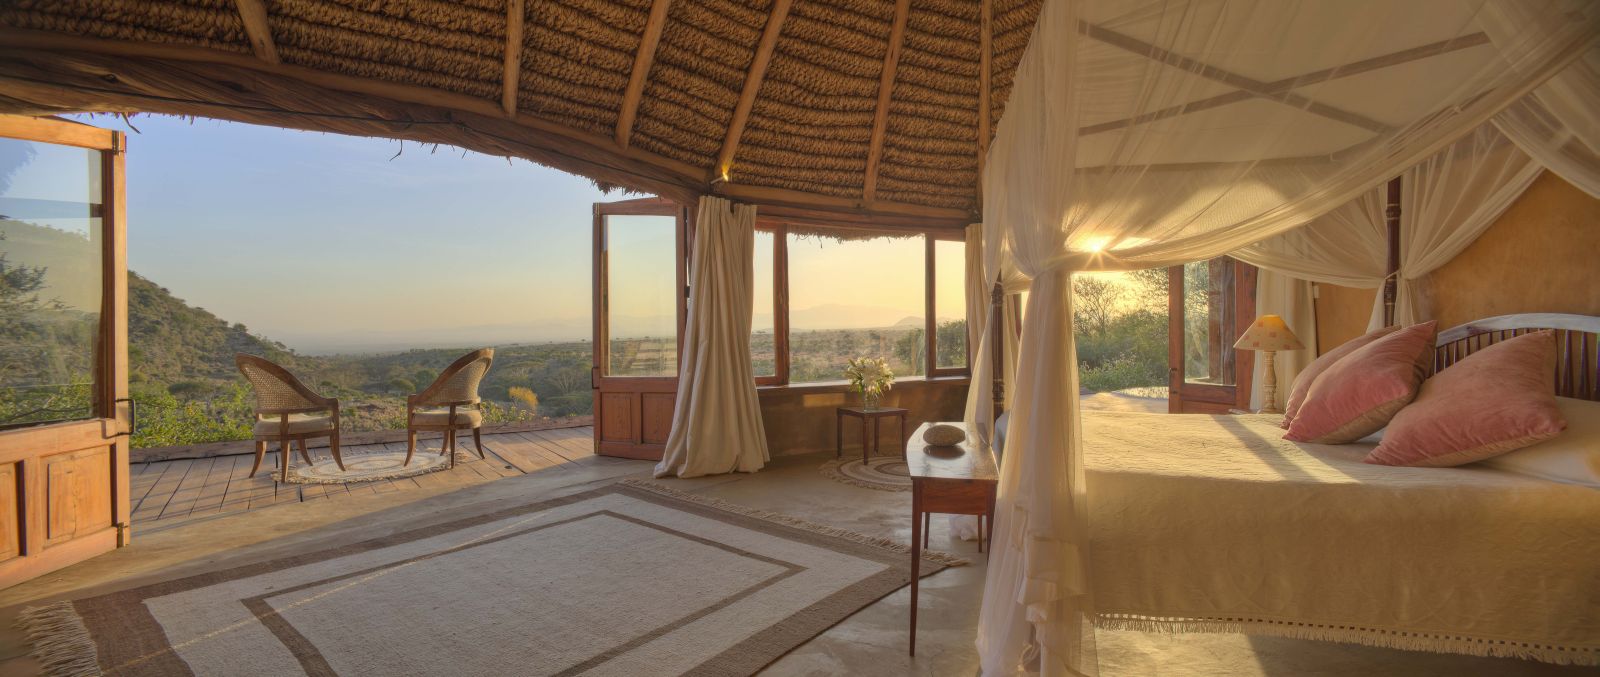 Interior of bedroom at Lewa Wilderness Camp in Kenya 